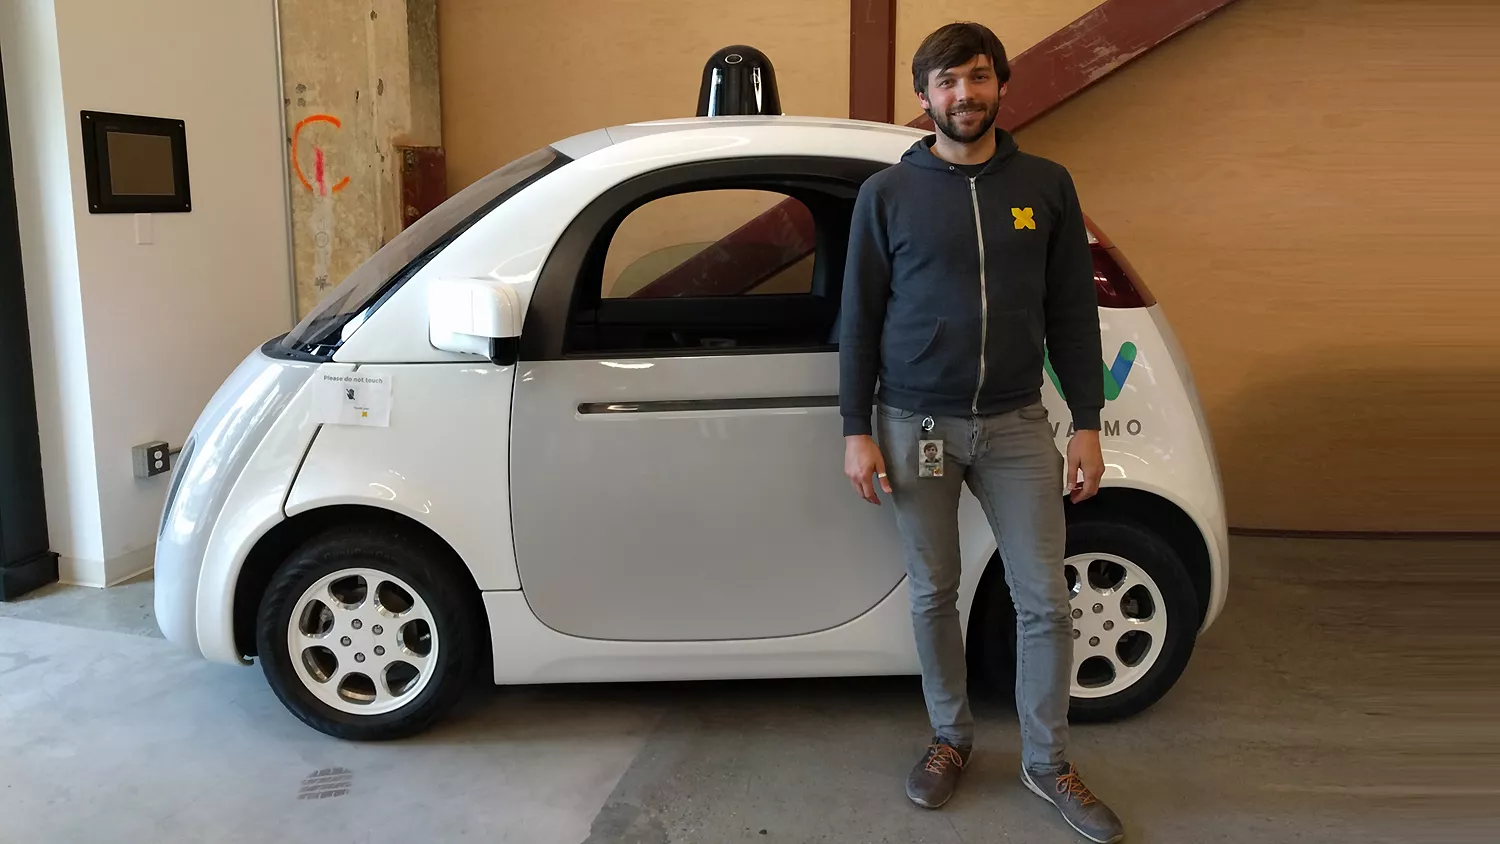 Elmar Mair in front of a Google car